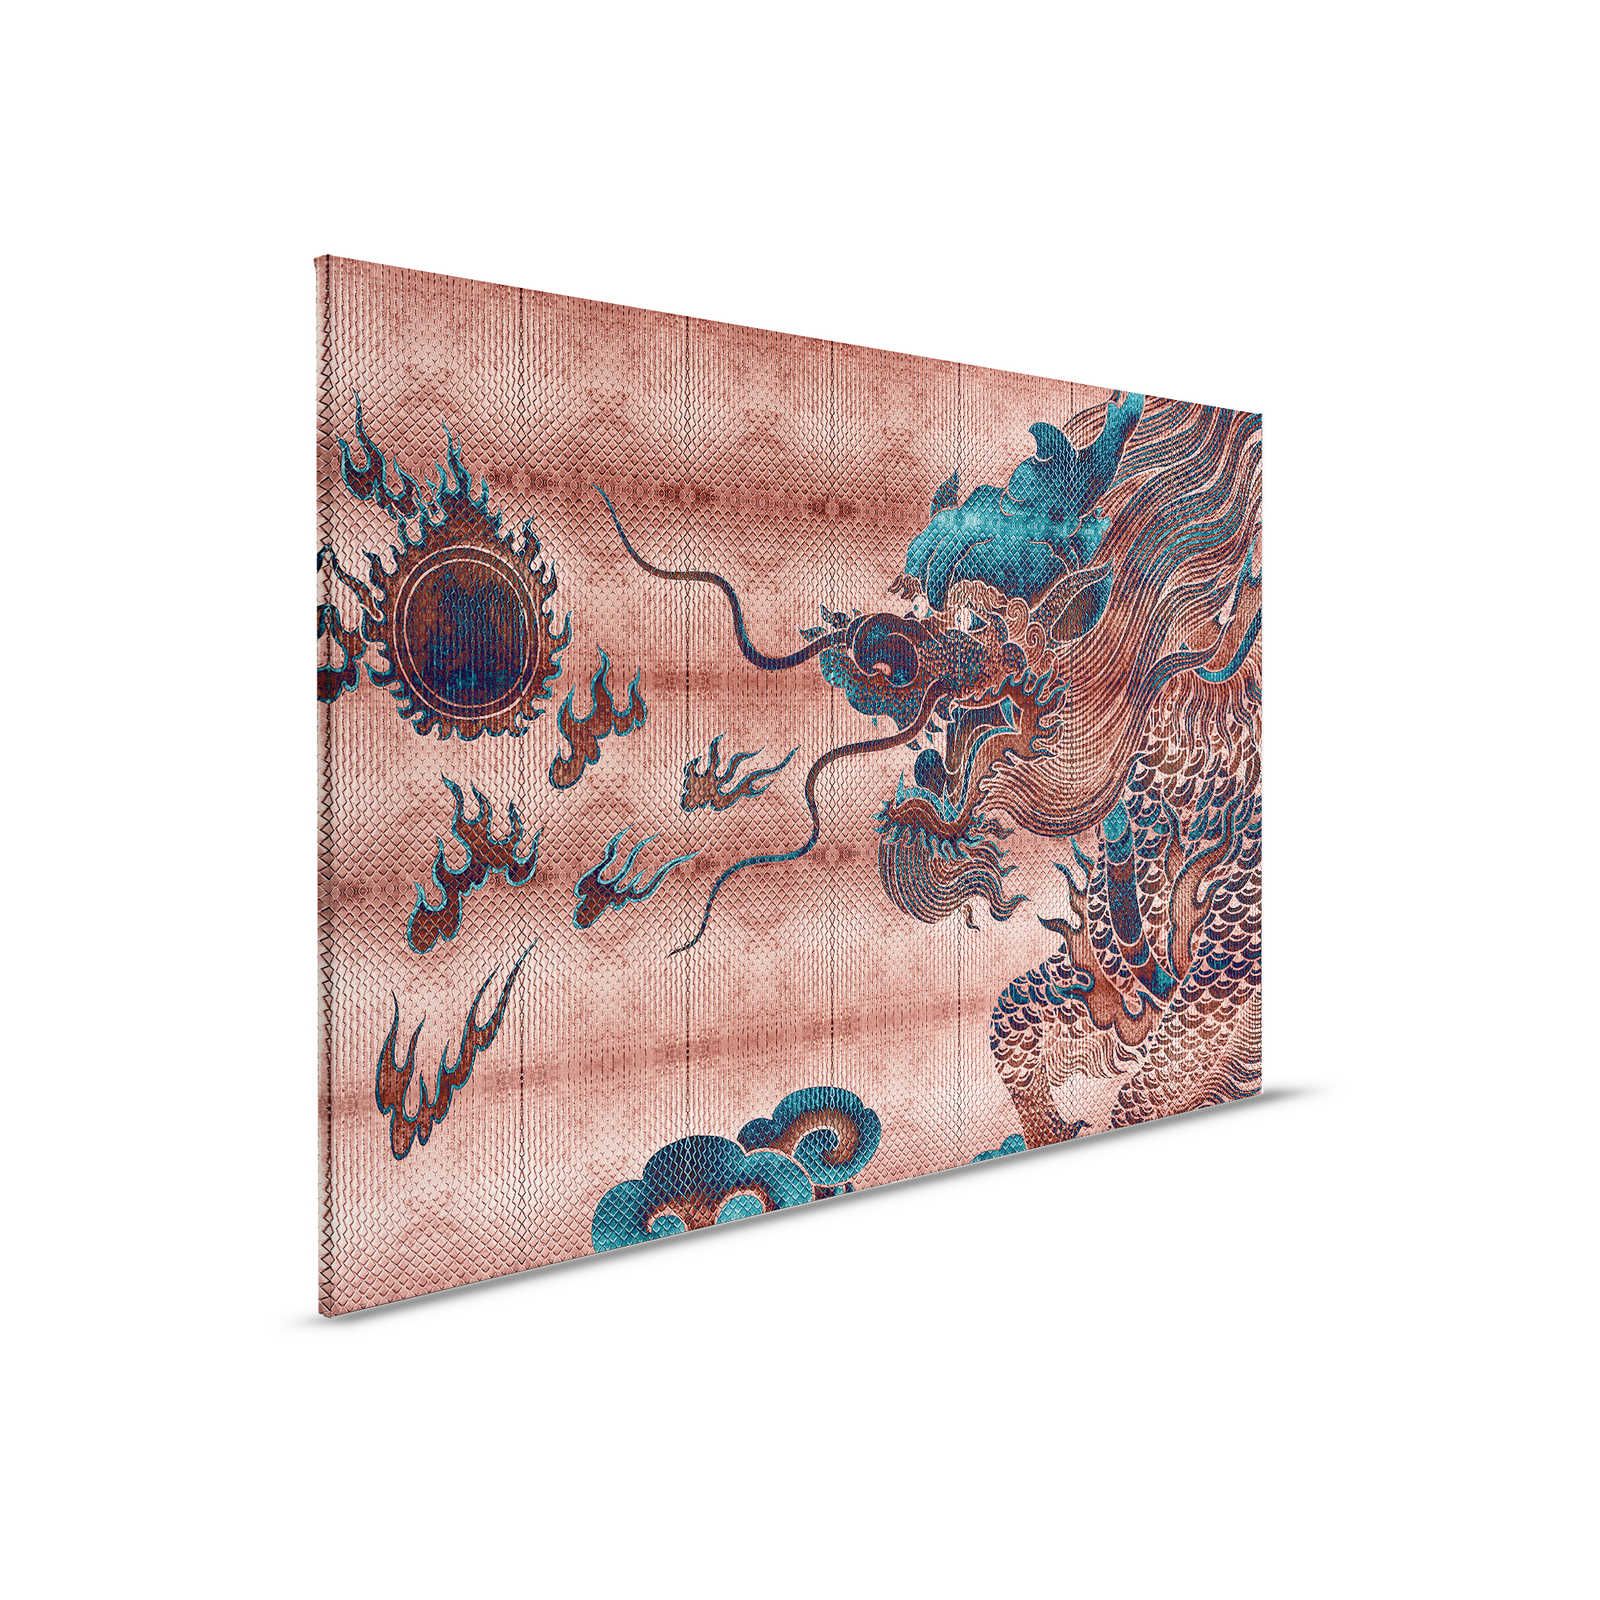 Shenzen 1 - Canvas schilderij Dragon Asian Syle met metallic kleuren - 0,90 m x 0,60 m
